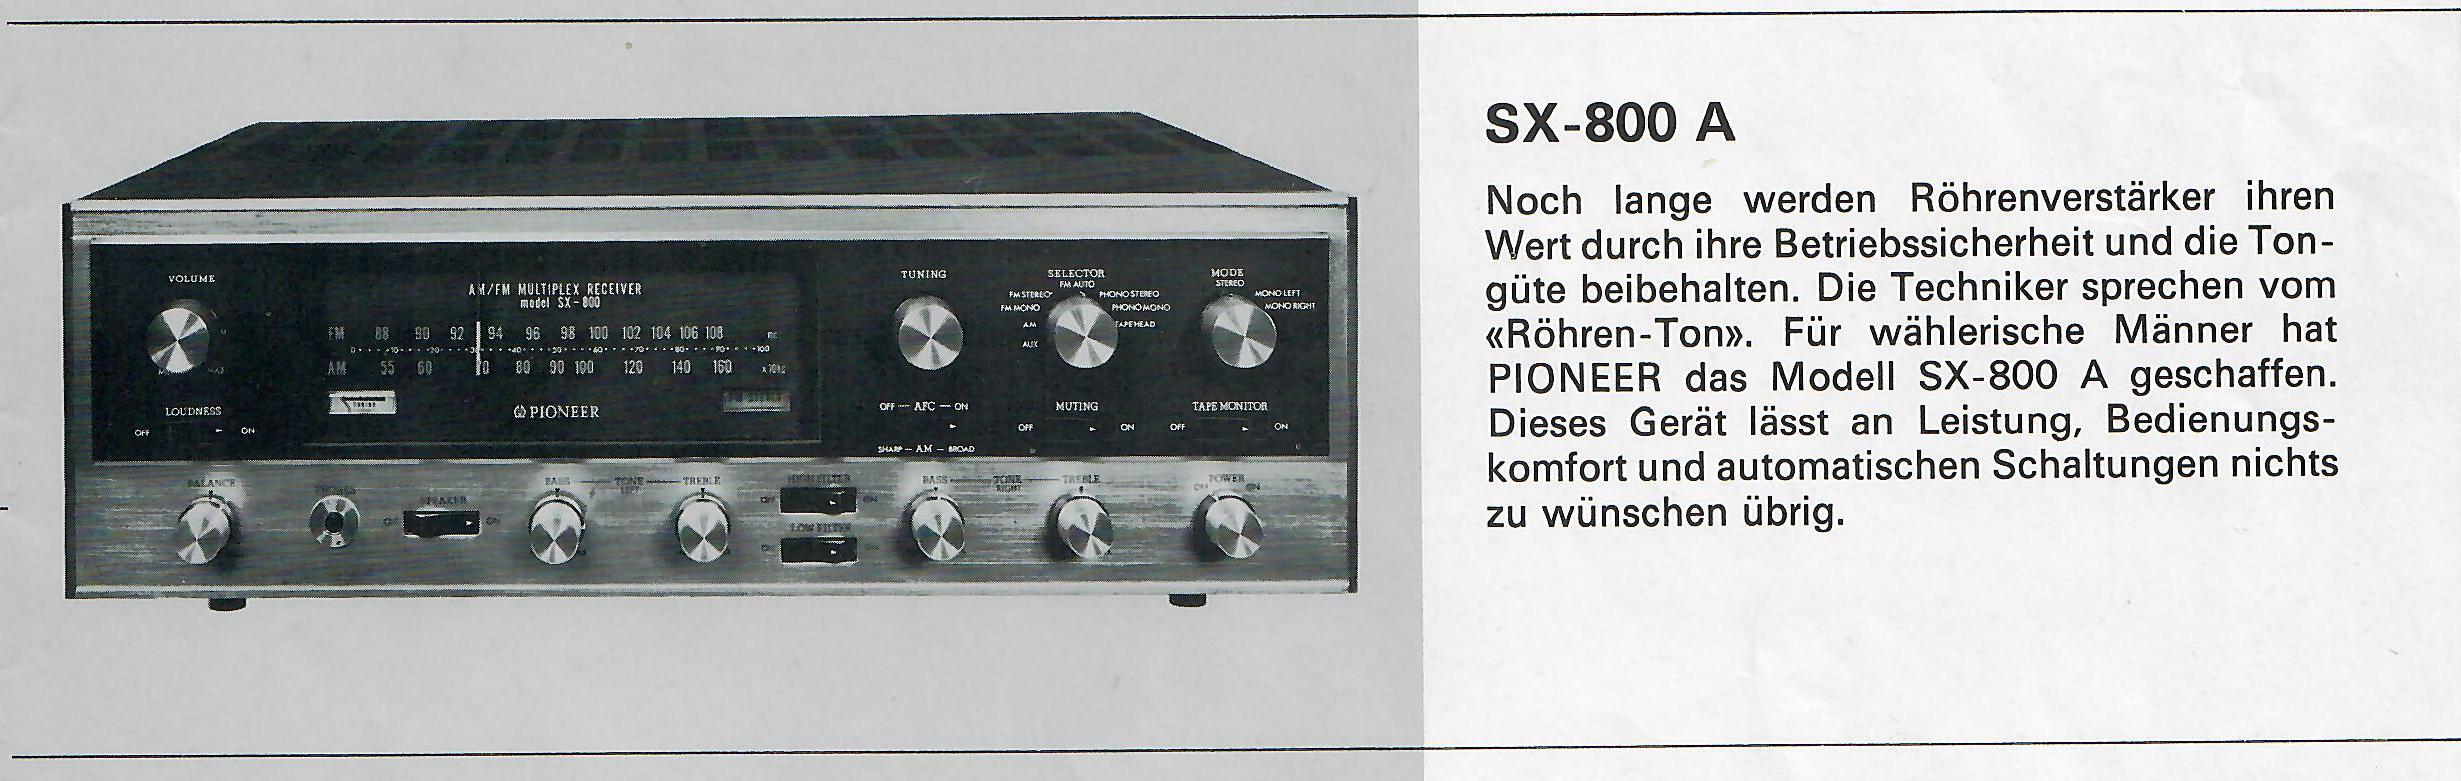 Pioneer SX-800 A-Prospekt-1.jpg